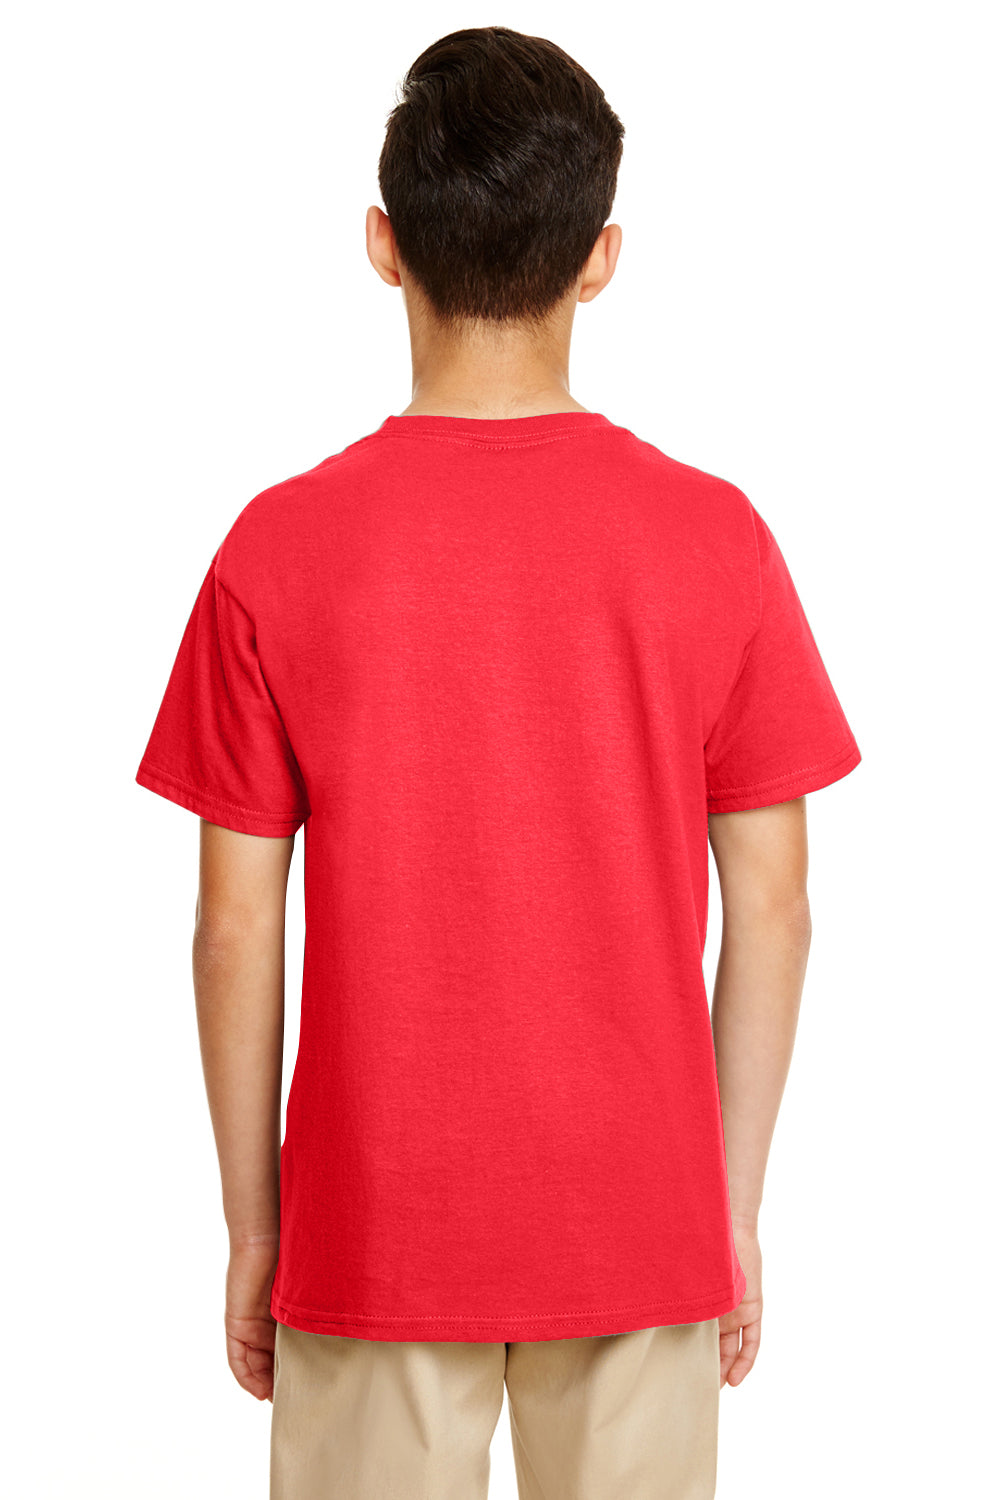 Gildan G645B Youth Softstyle Short Sleeve Crewneck T-Shirt Red Back